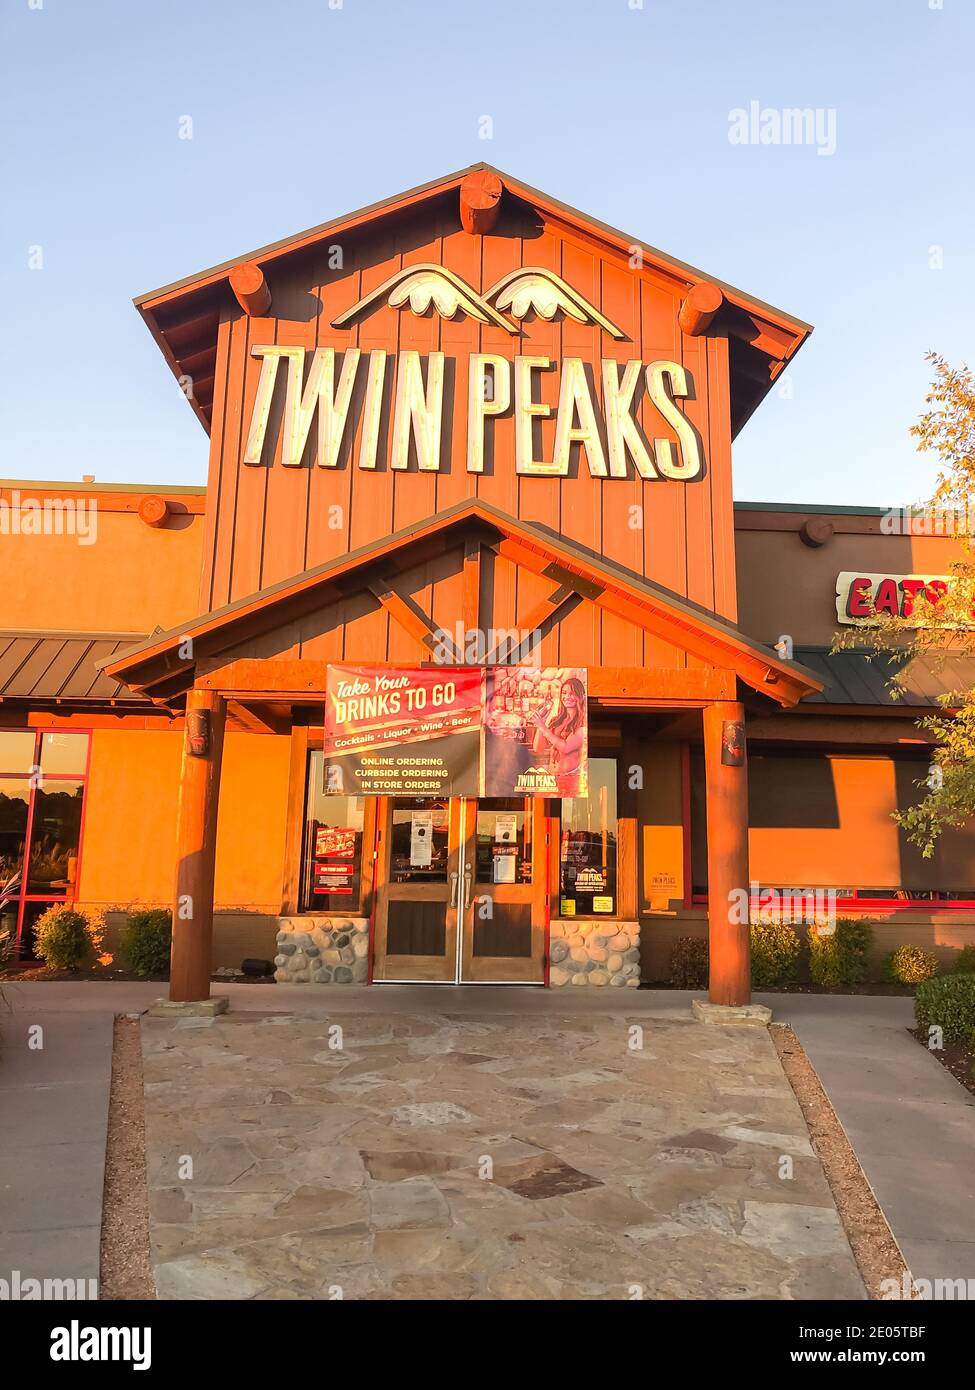 Twin Peaks Restaurants: Scratch American Food, Draft Beer & Live Sports